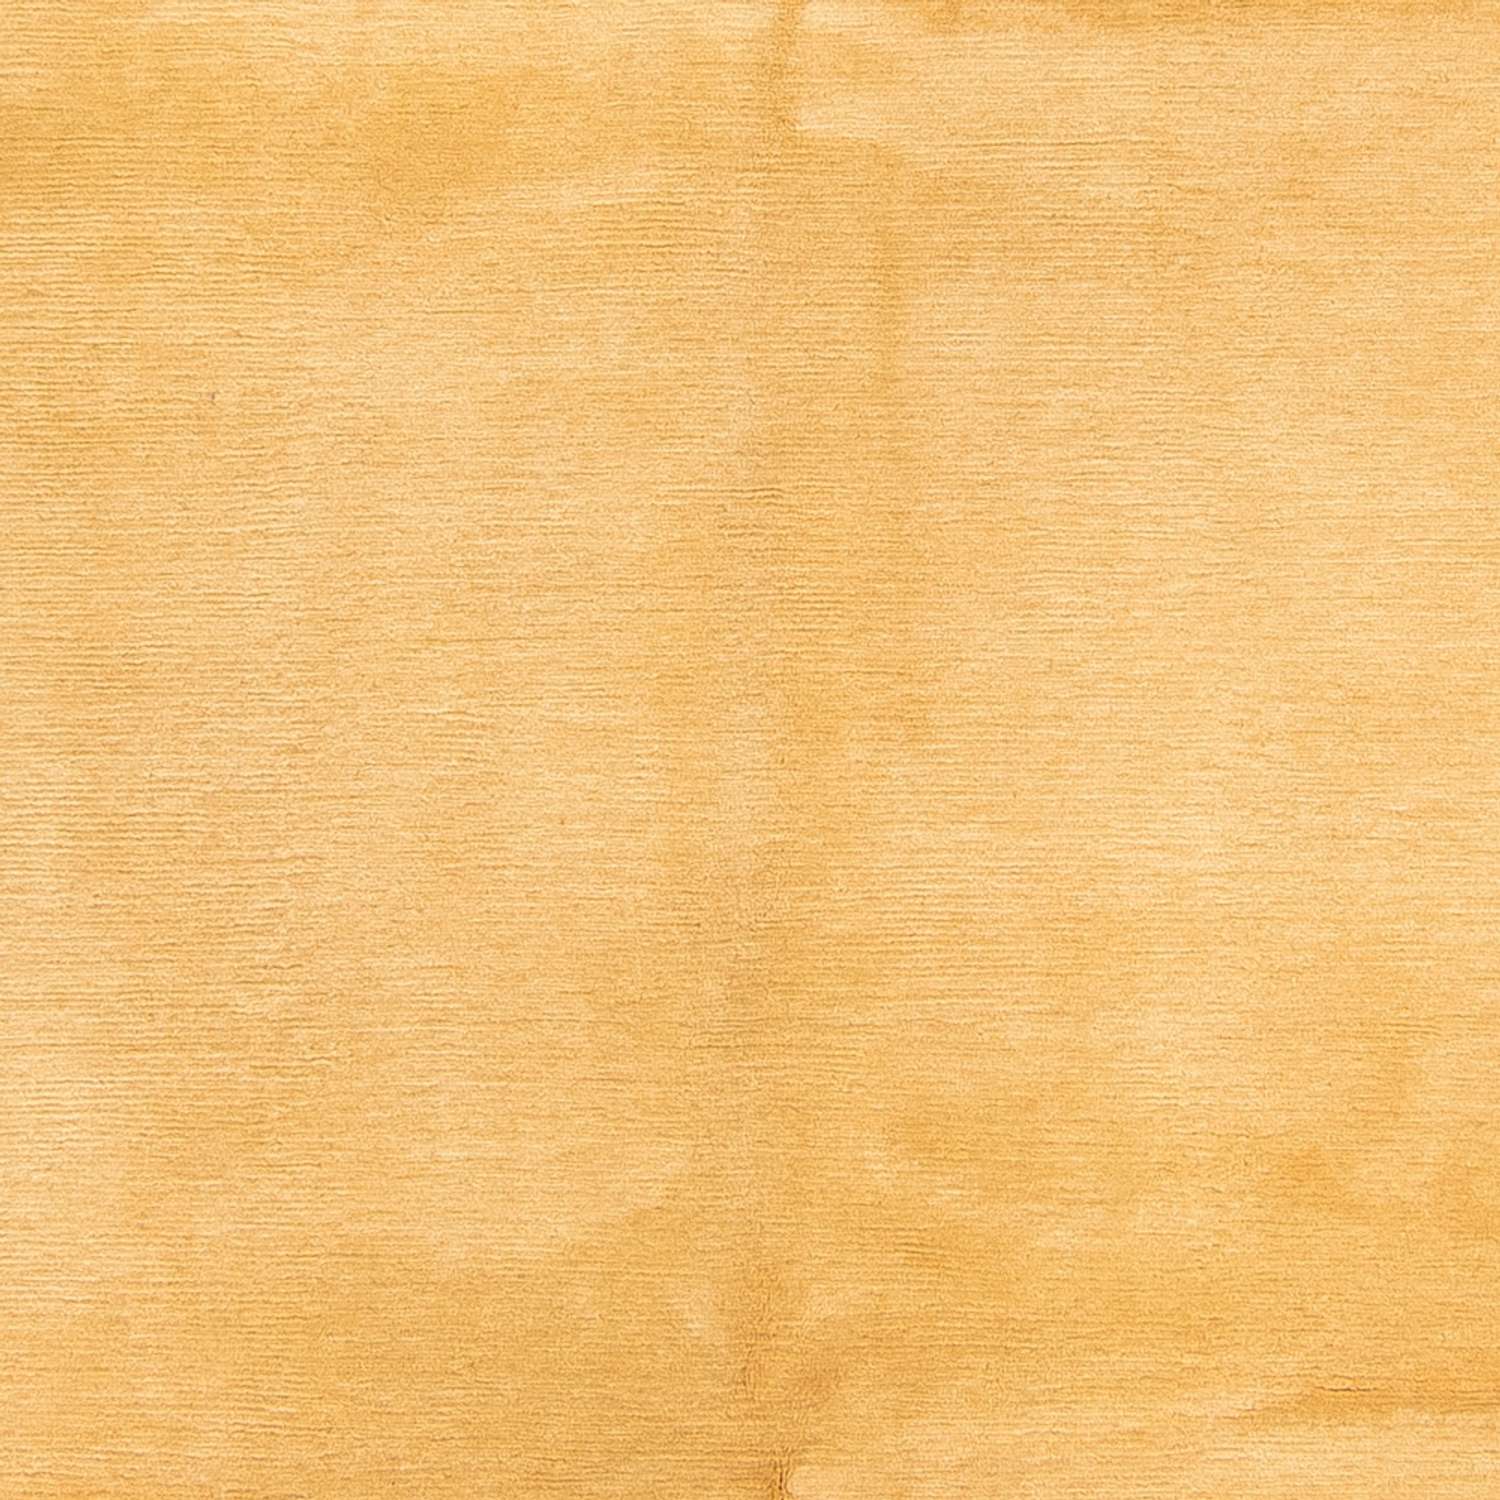 Nepal tapijt - 296 x 200 cm - beige